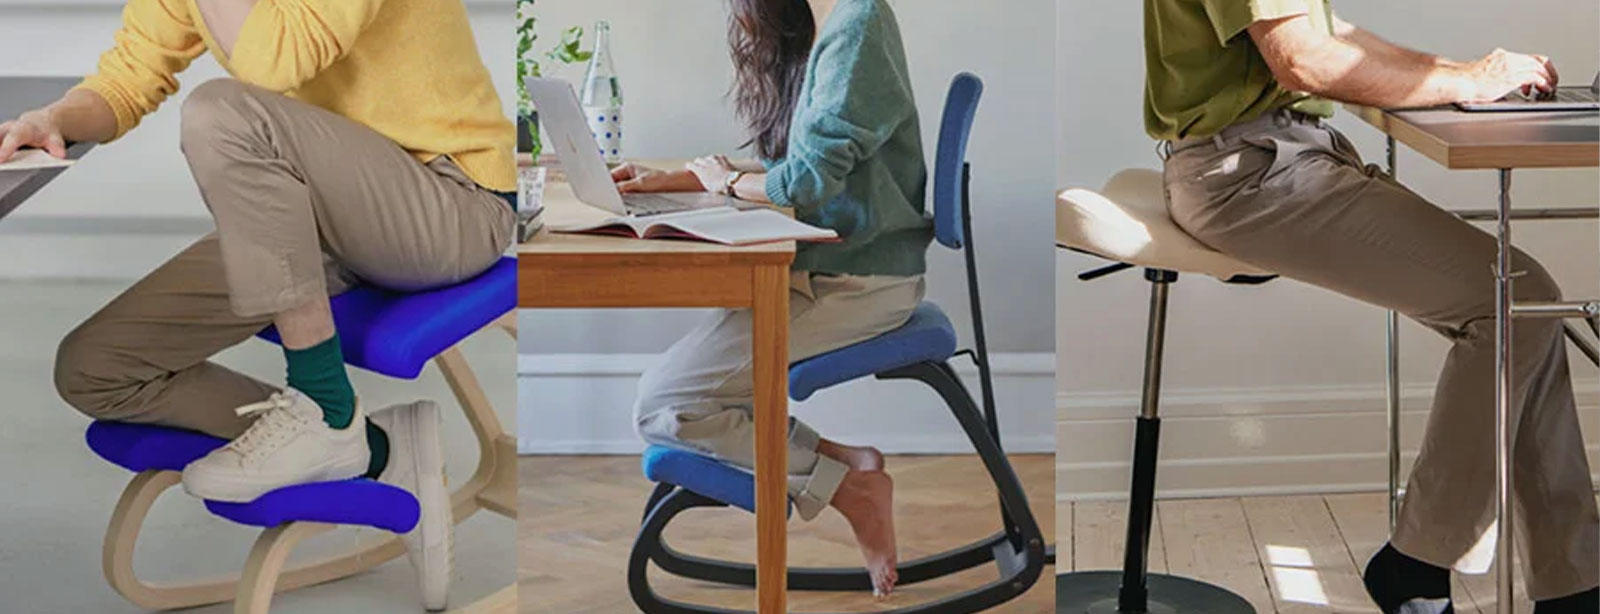 Silla ergonomica o postural para escritorio